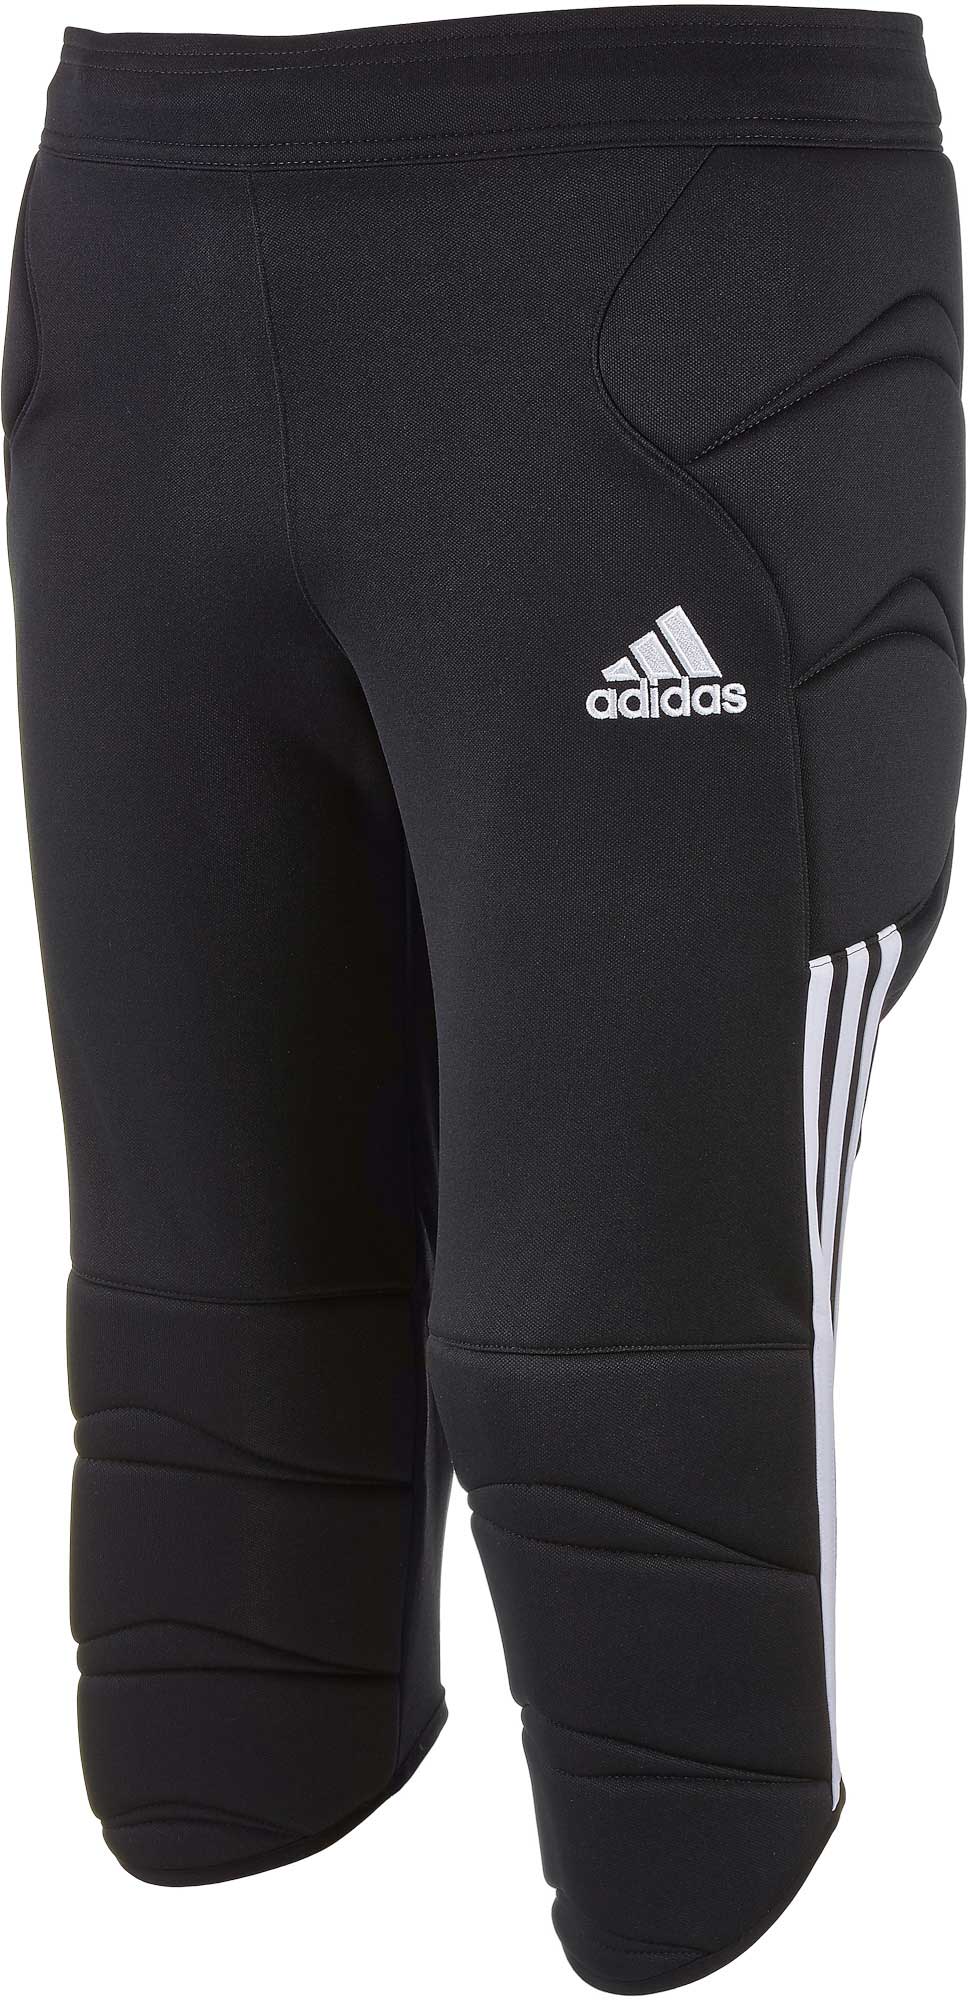 adidas tierro 13 goalkeeper pants